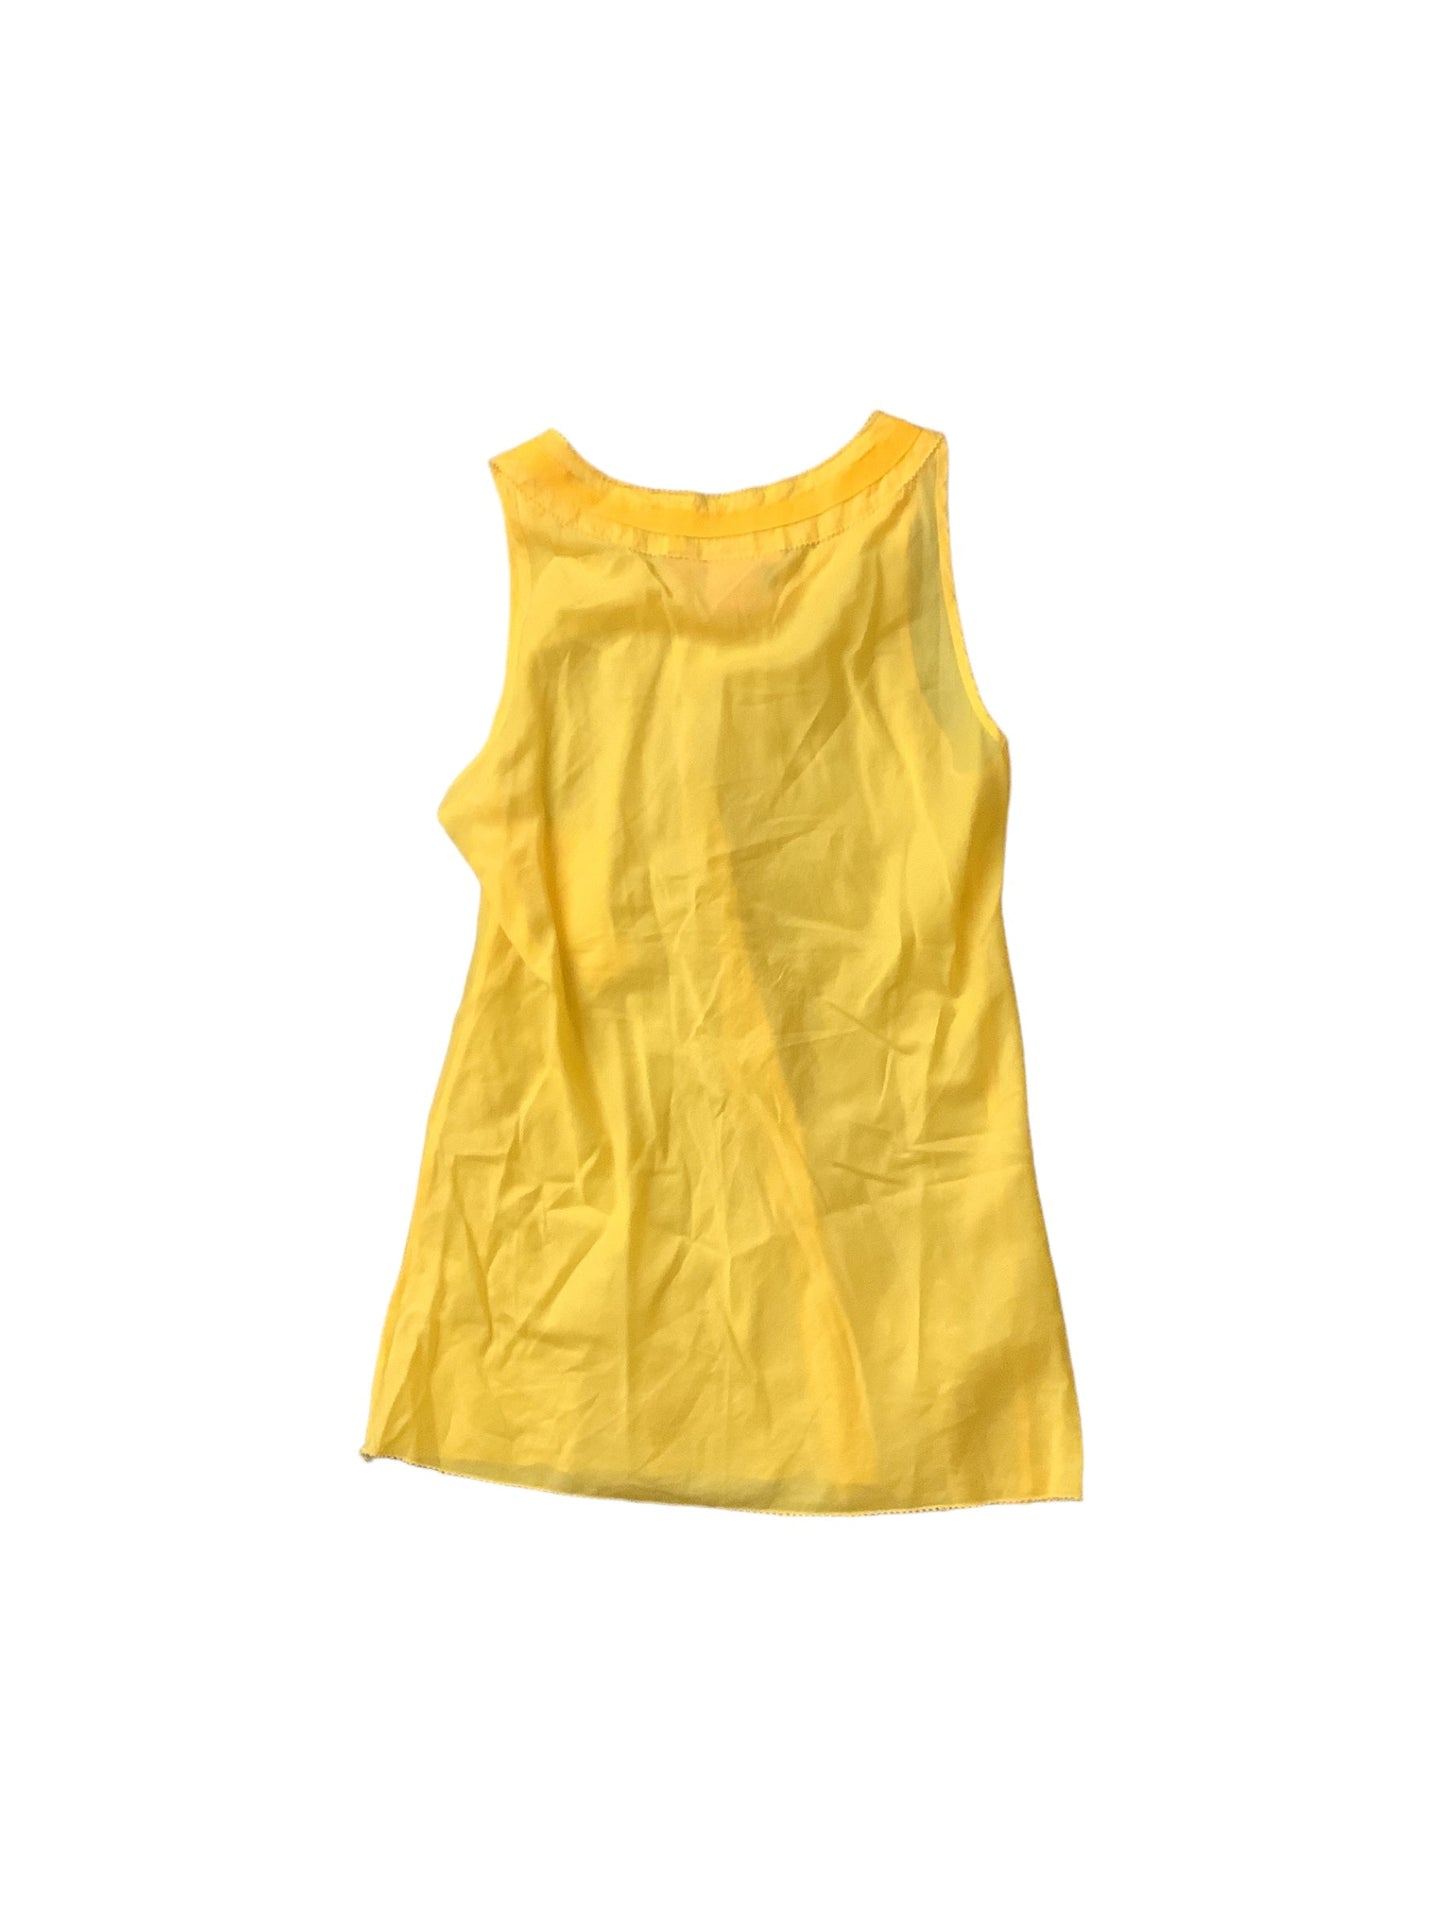 Yellow Top Sleeveless Tory Burch, Size 8